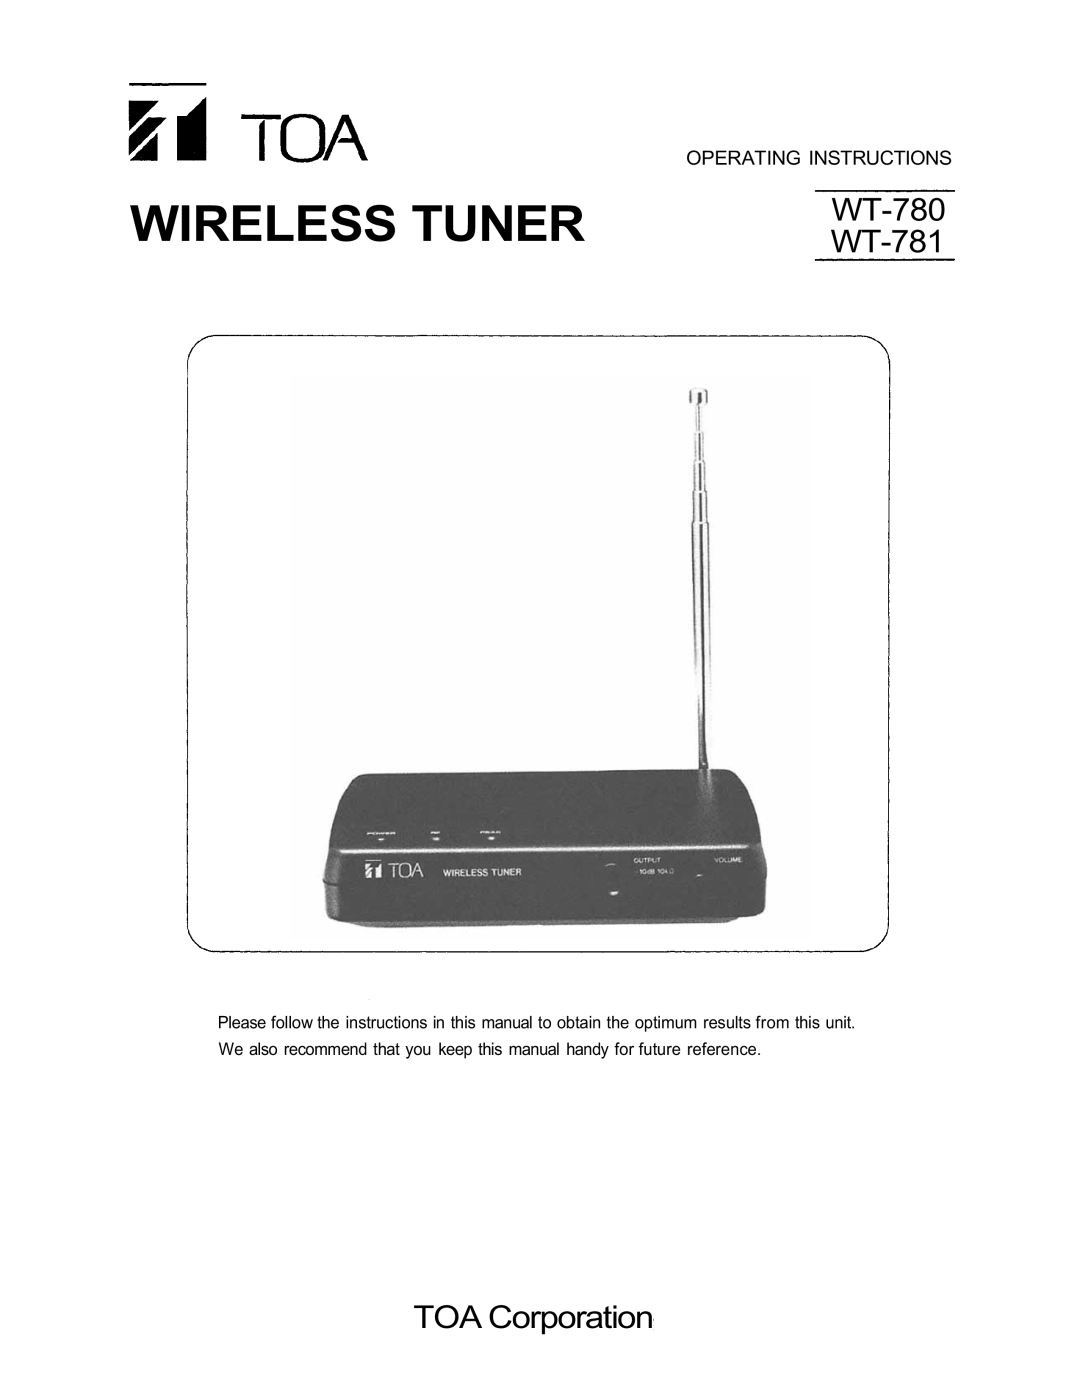 Verizon operating instructions Operating Instructions, Wireless Tuner, WT-780 WT-781, TOA Corporation 